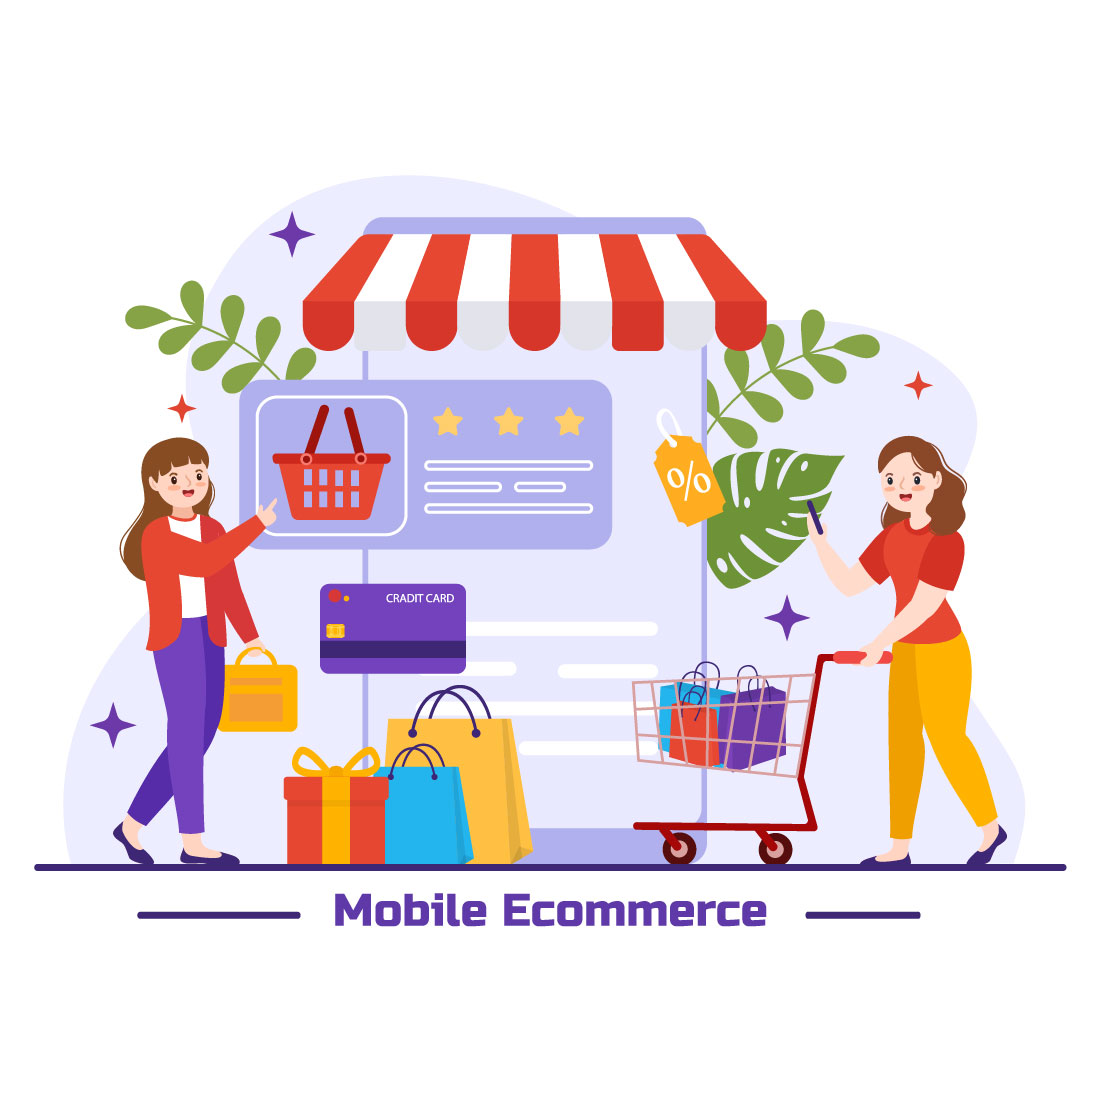 12 Mobile E-Commerce Vector Illustration cover image.